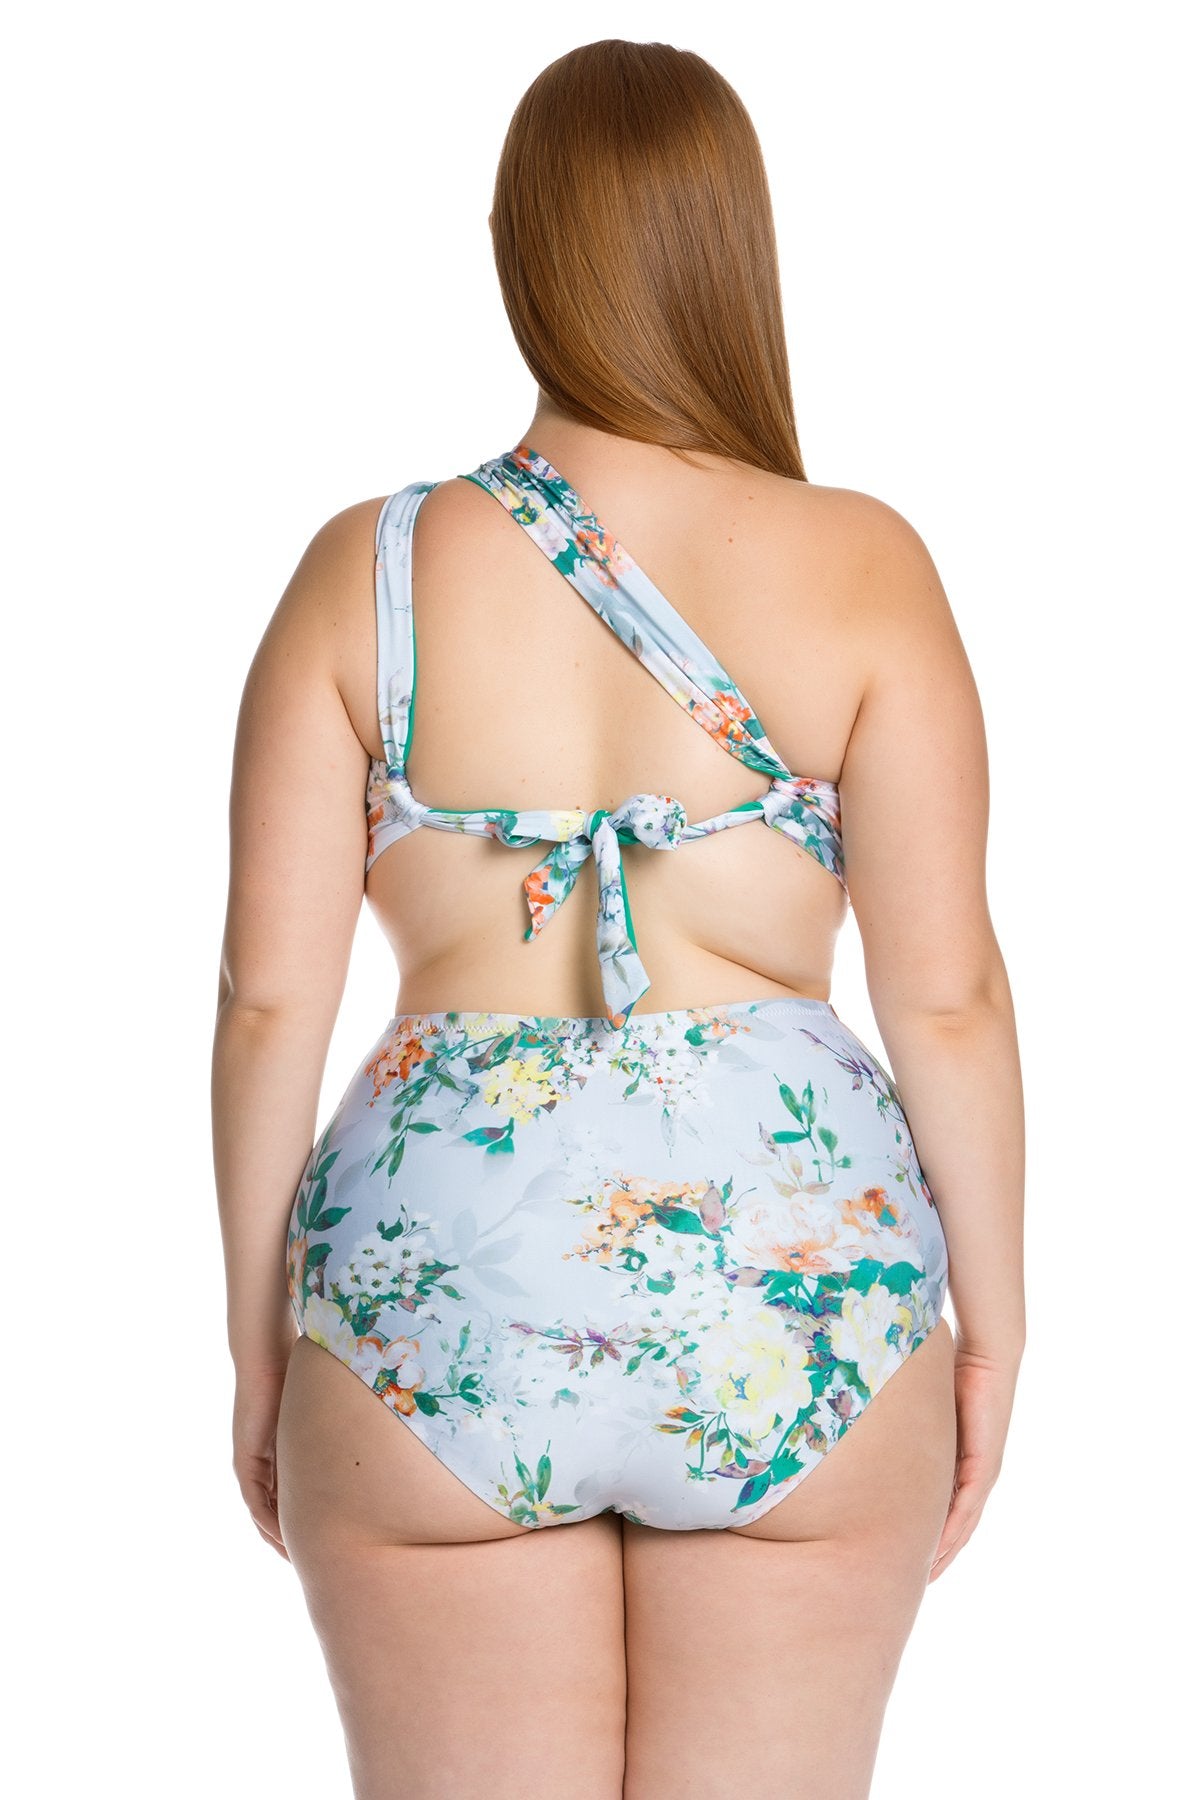 Femme Flora High-Waist Bottom, Becca Etc - Iridescent Swimwear Boutique | Toronto, Canada